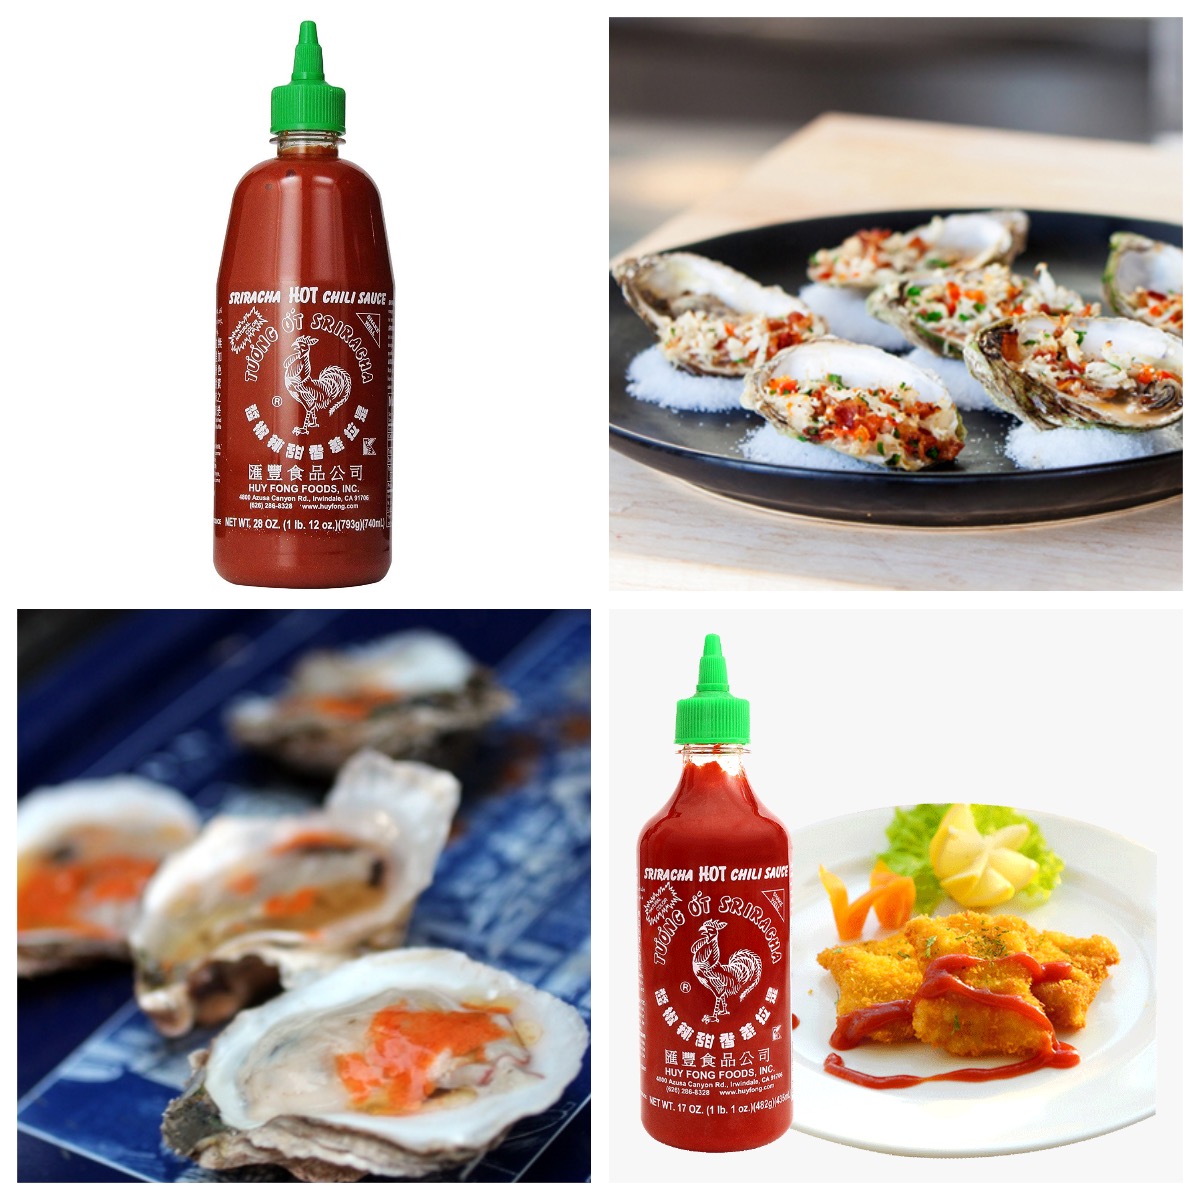 Is There A New Huy Fong Sriracha Chili Pepper Recipe?